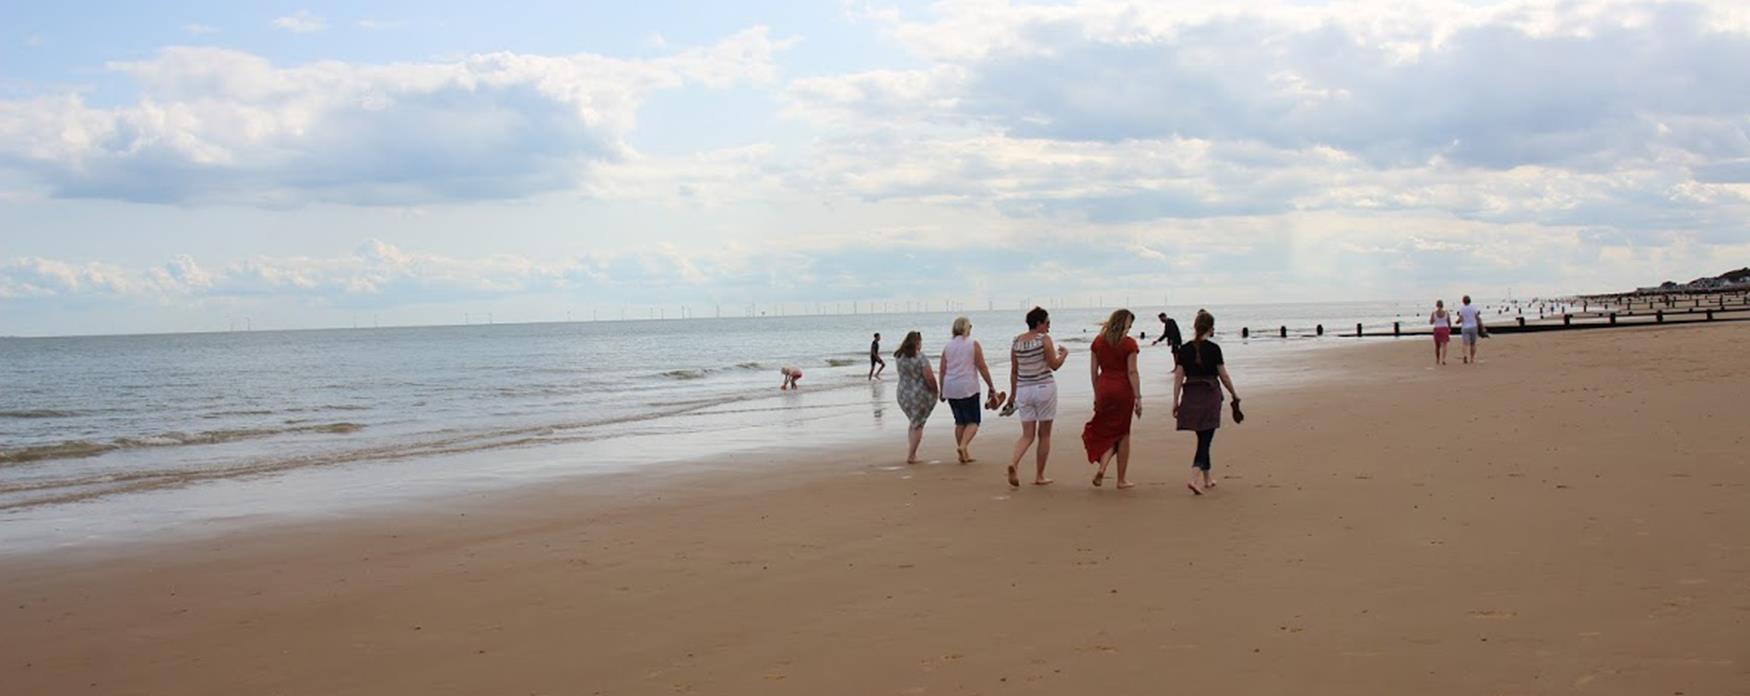 A group of people walking along Frinton-On-Sea beach